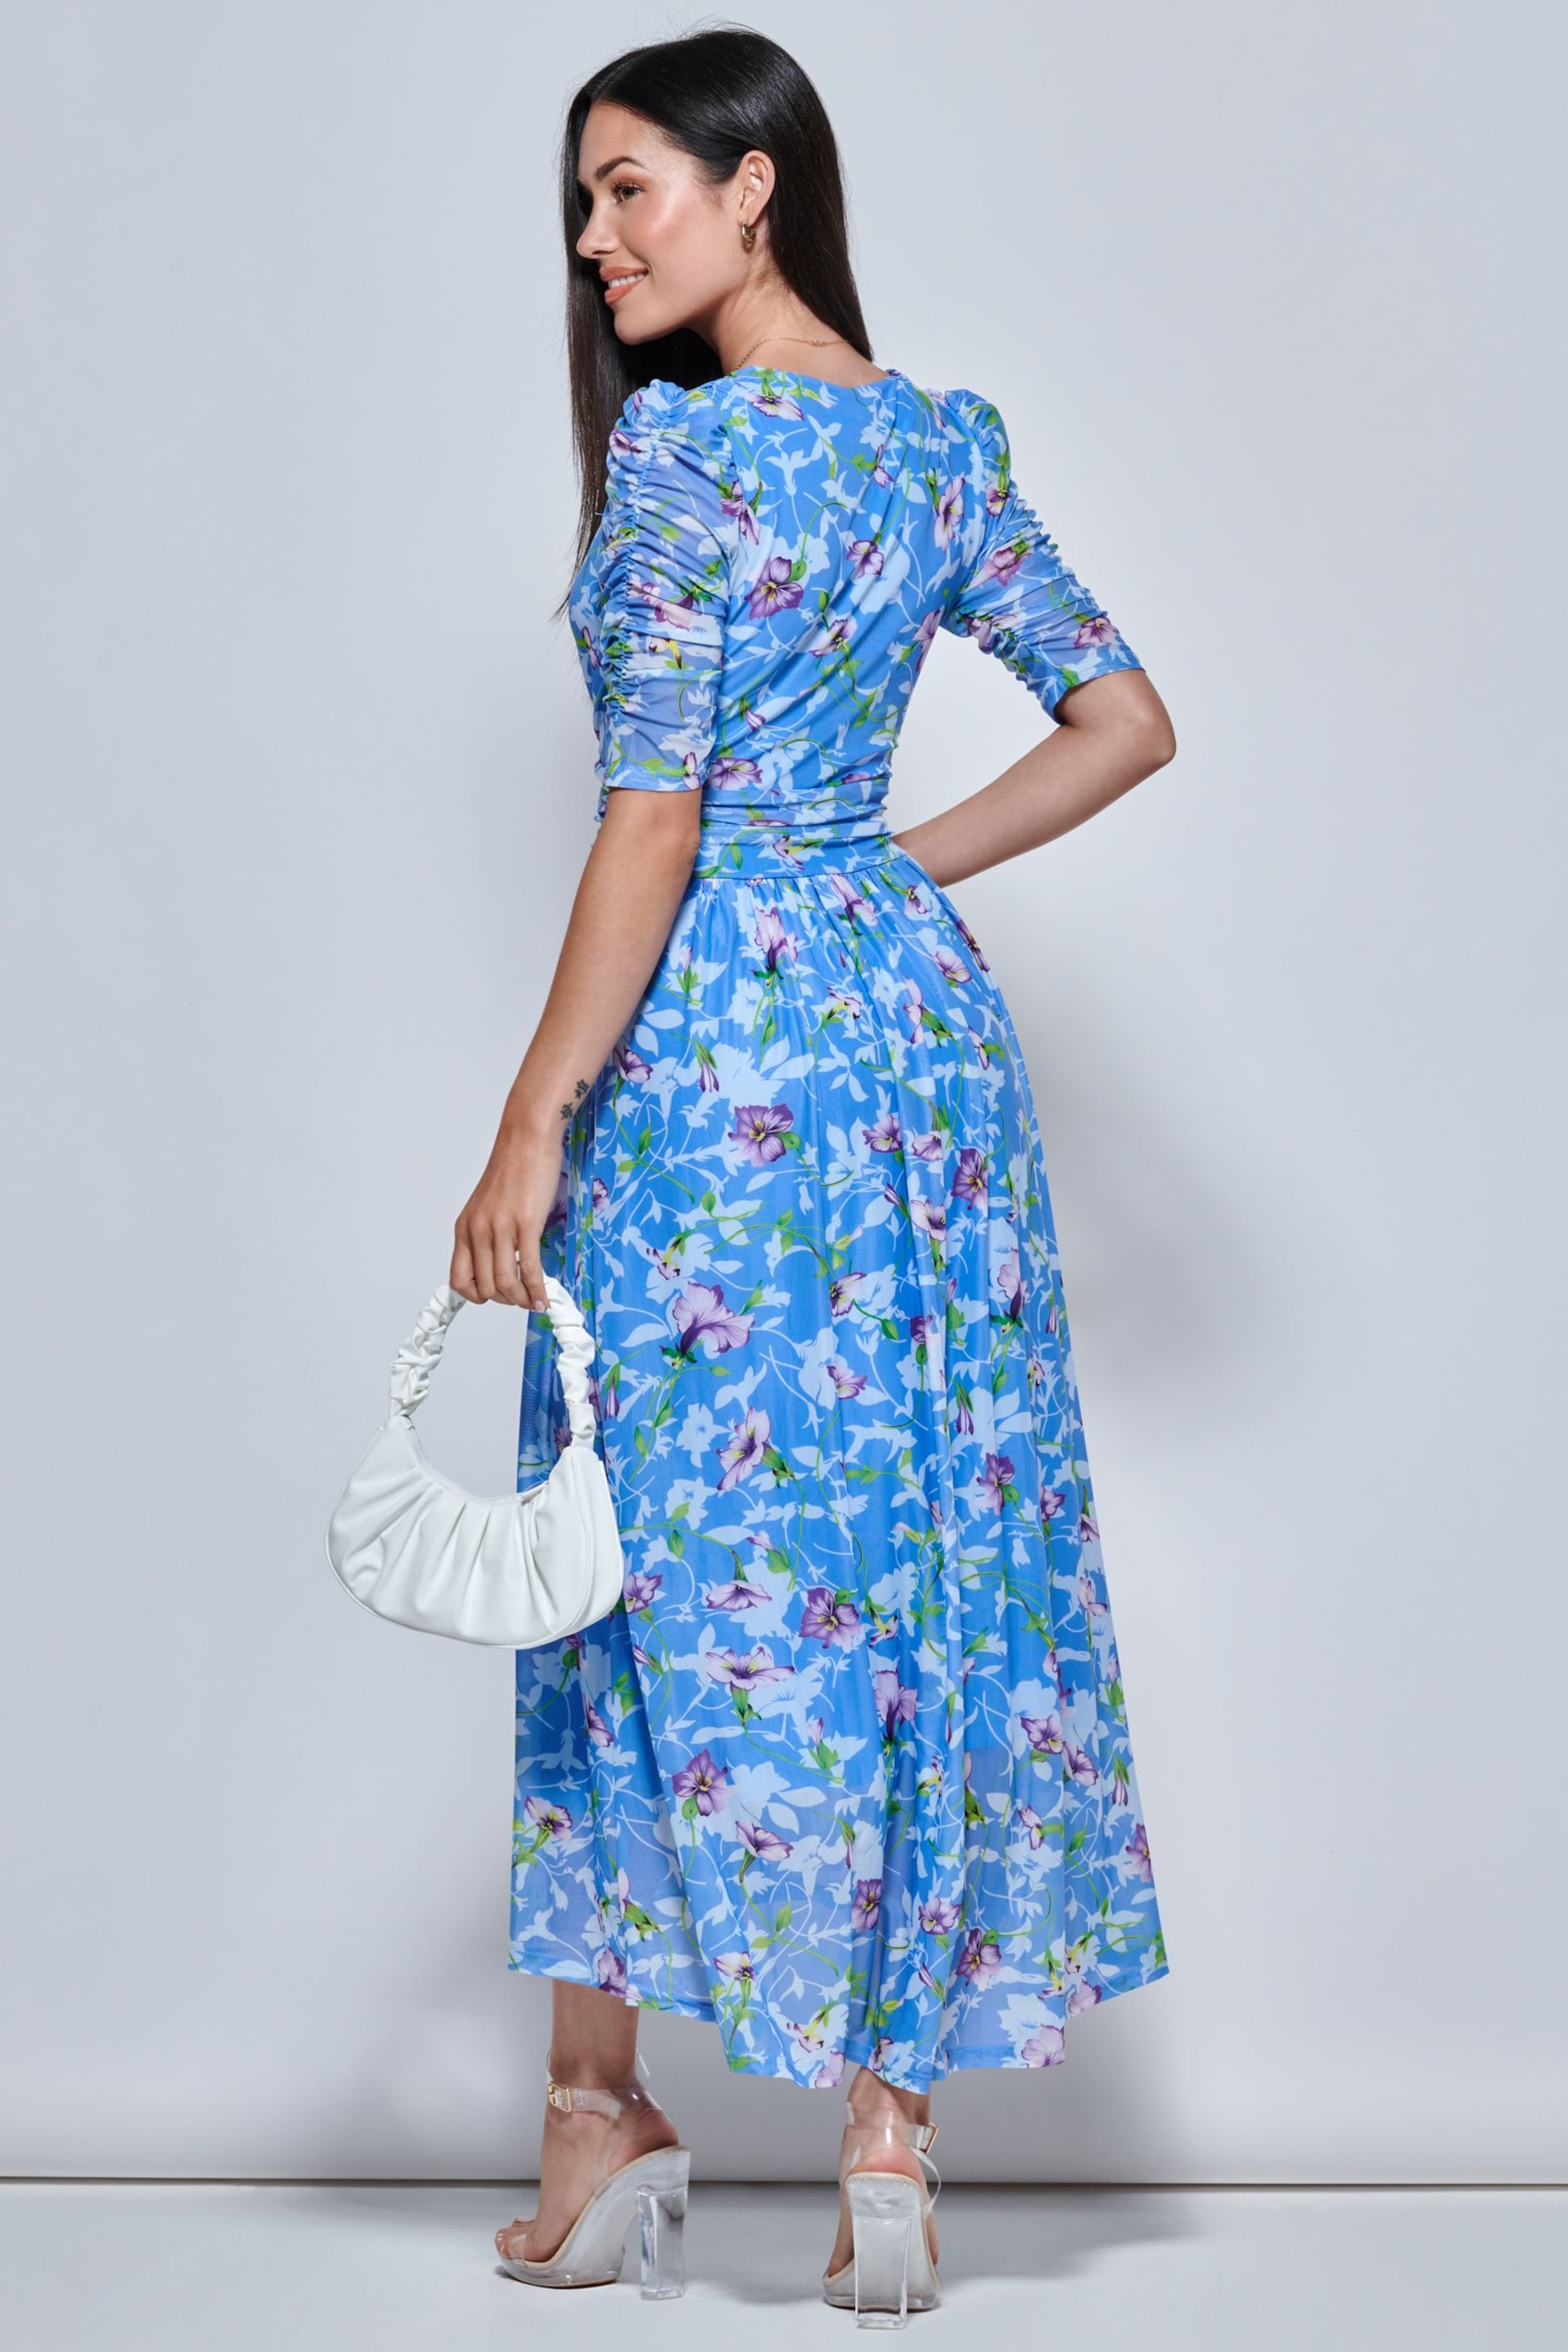 Jolie Moi Blue Print Dip Hem Mesh Maxi Dress - Image 2 of 5